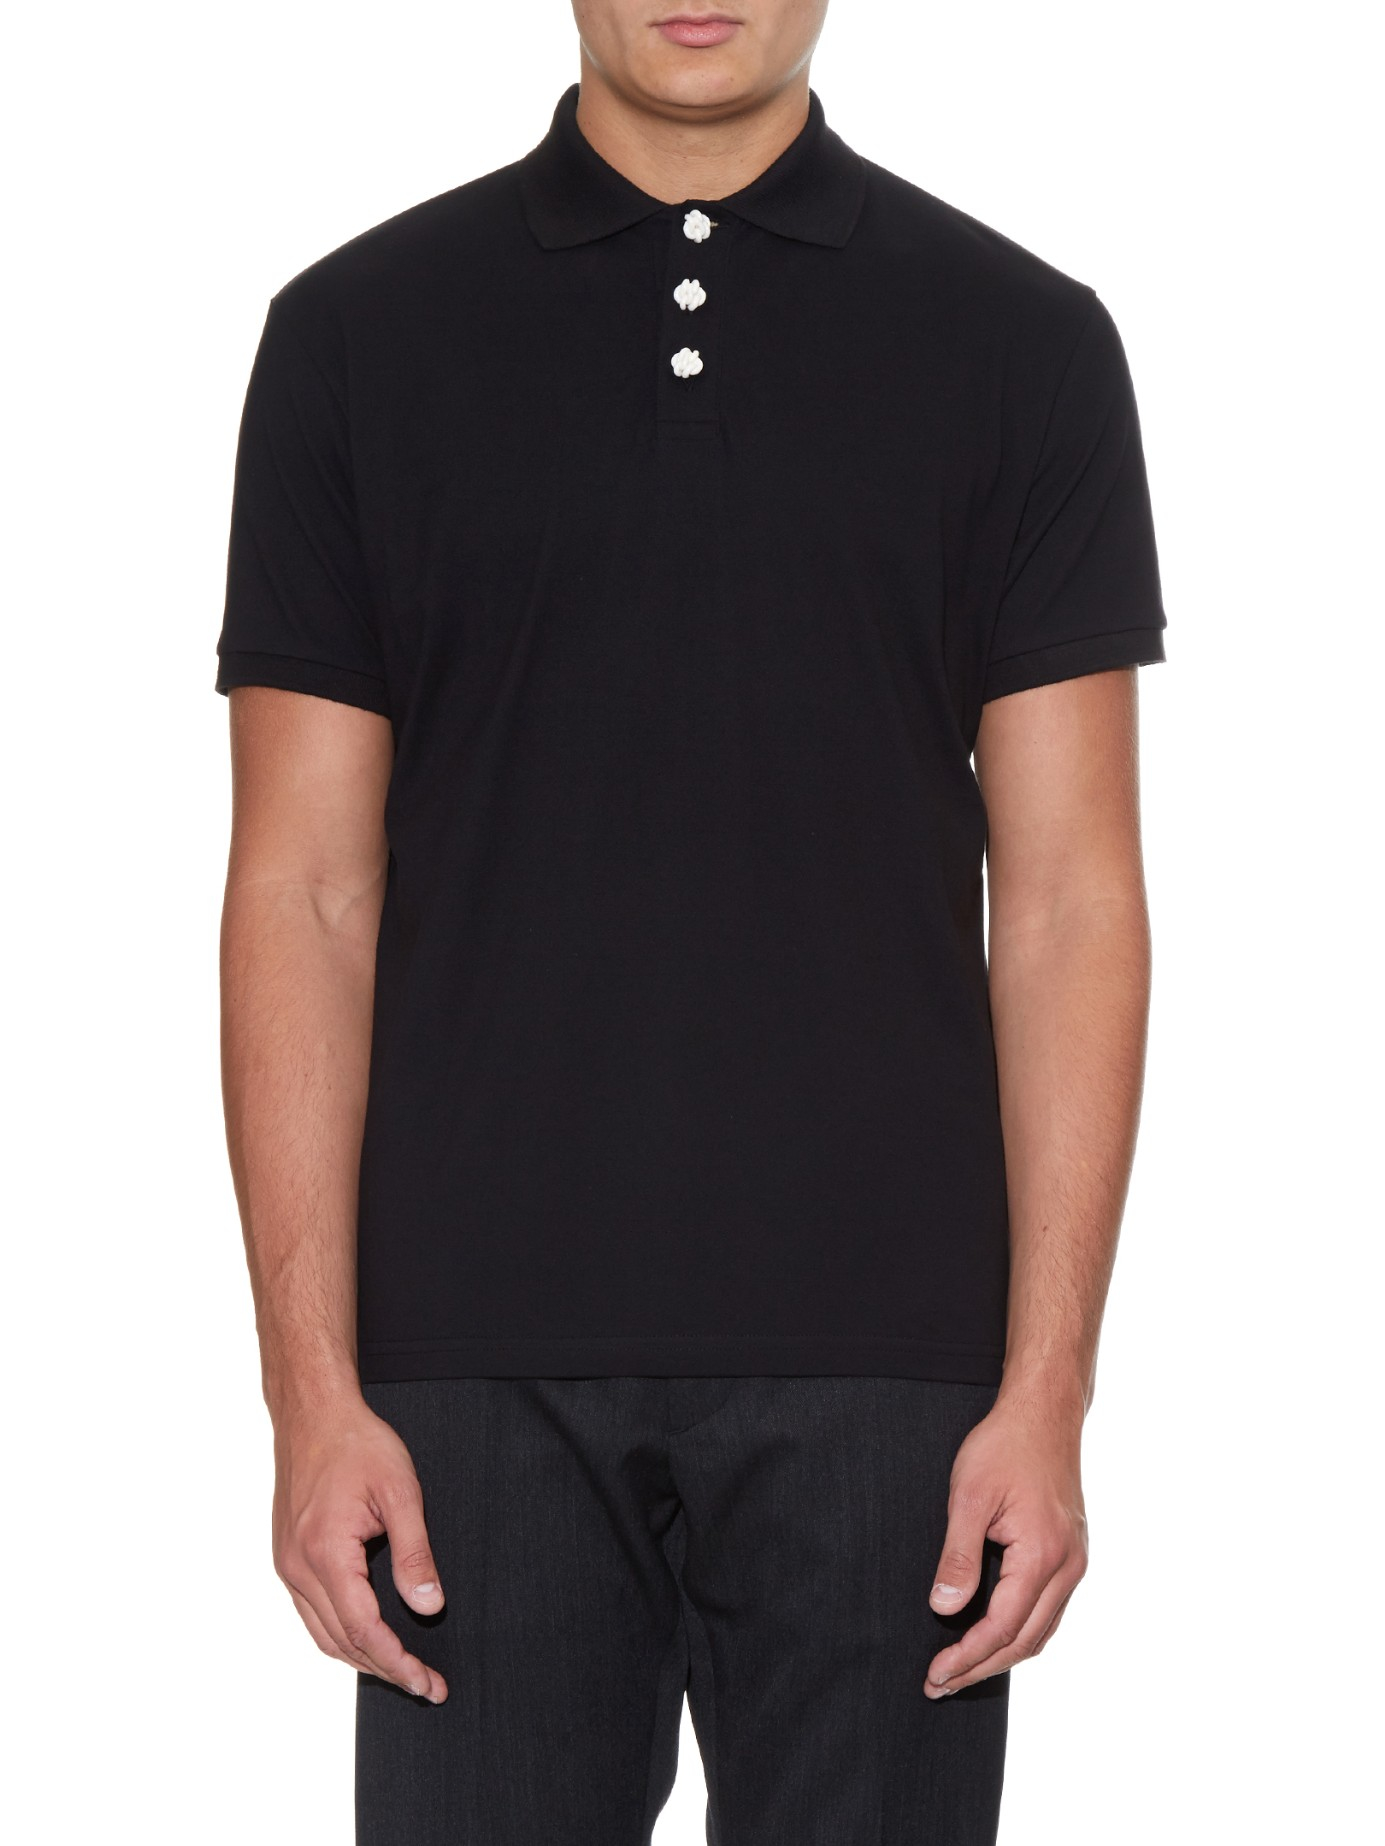 JW Anderson Knot-Button Cotton-Piqué Polo Shirt in Black for Men - Lyst